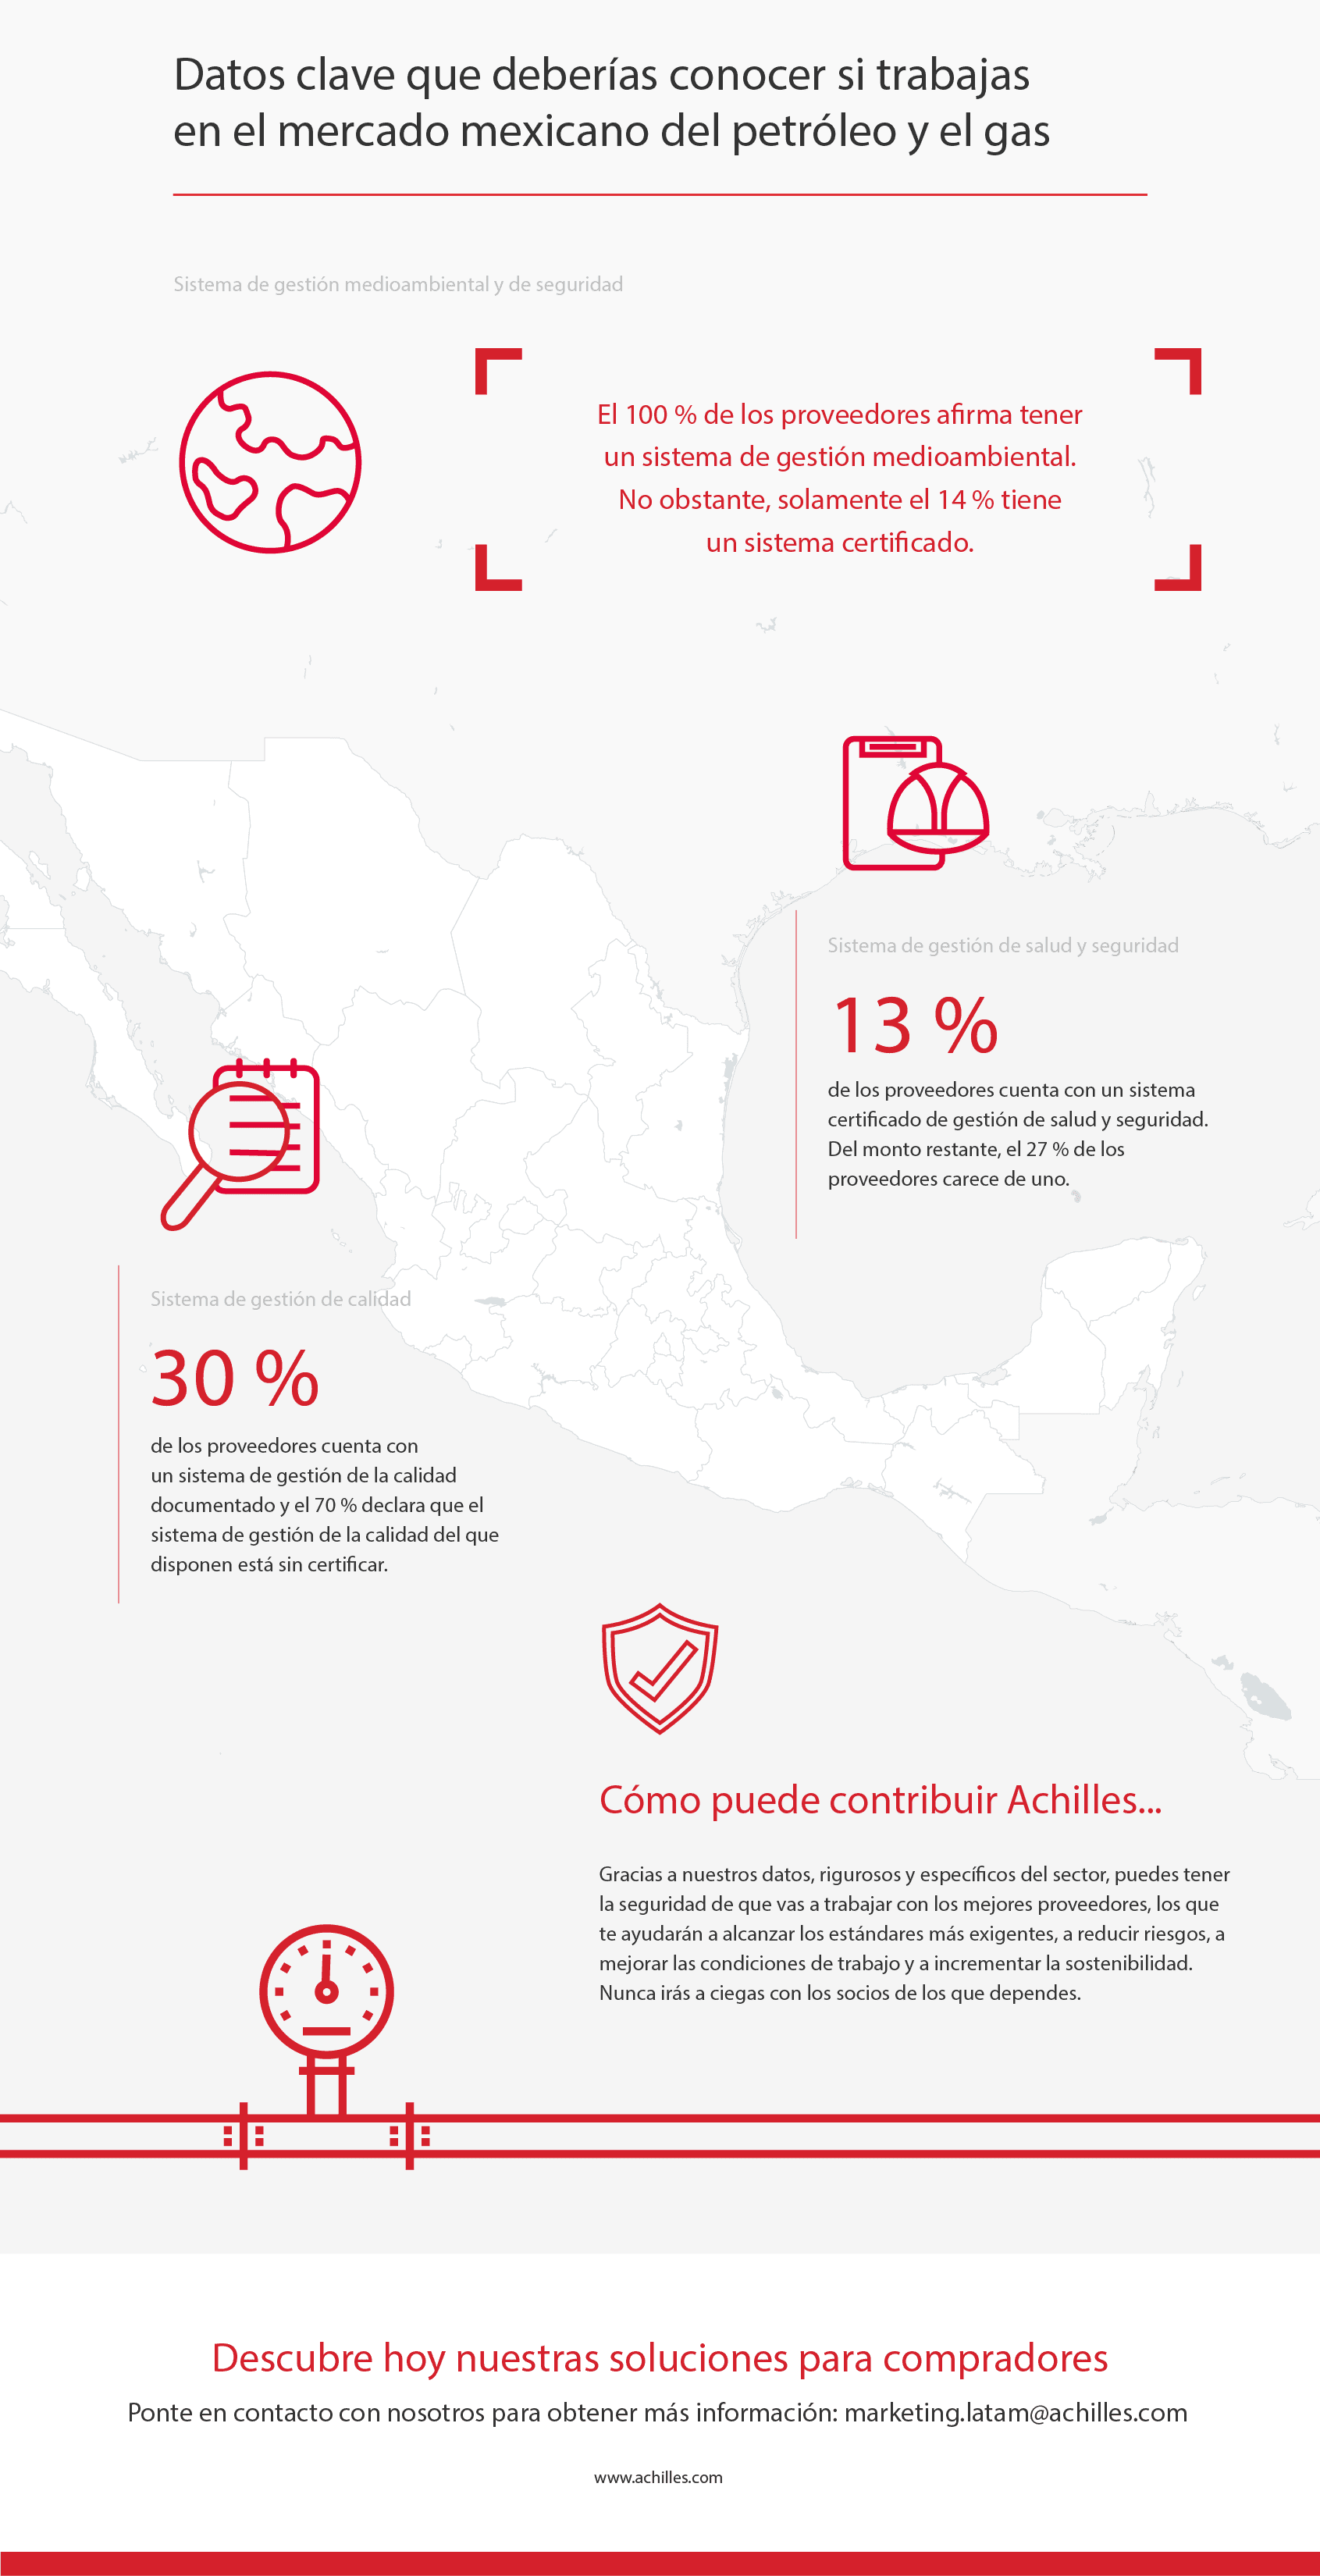 Infographic: Datos Clave del Sector Petrolero Mexicano